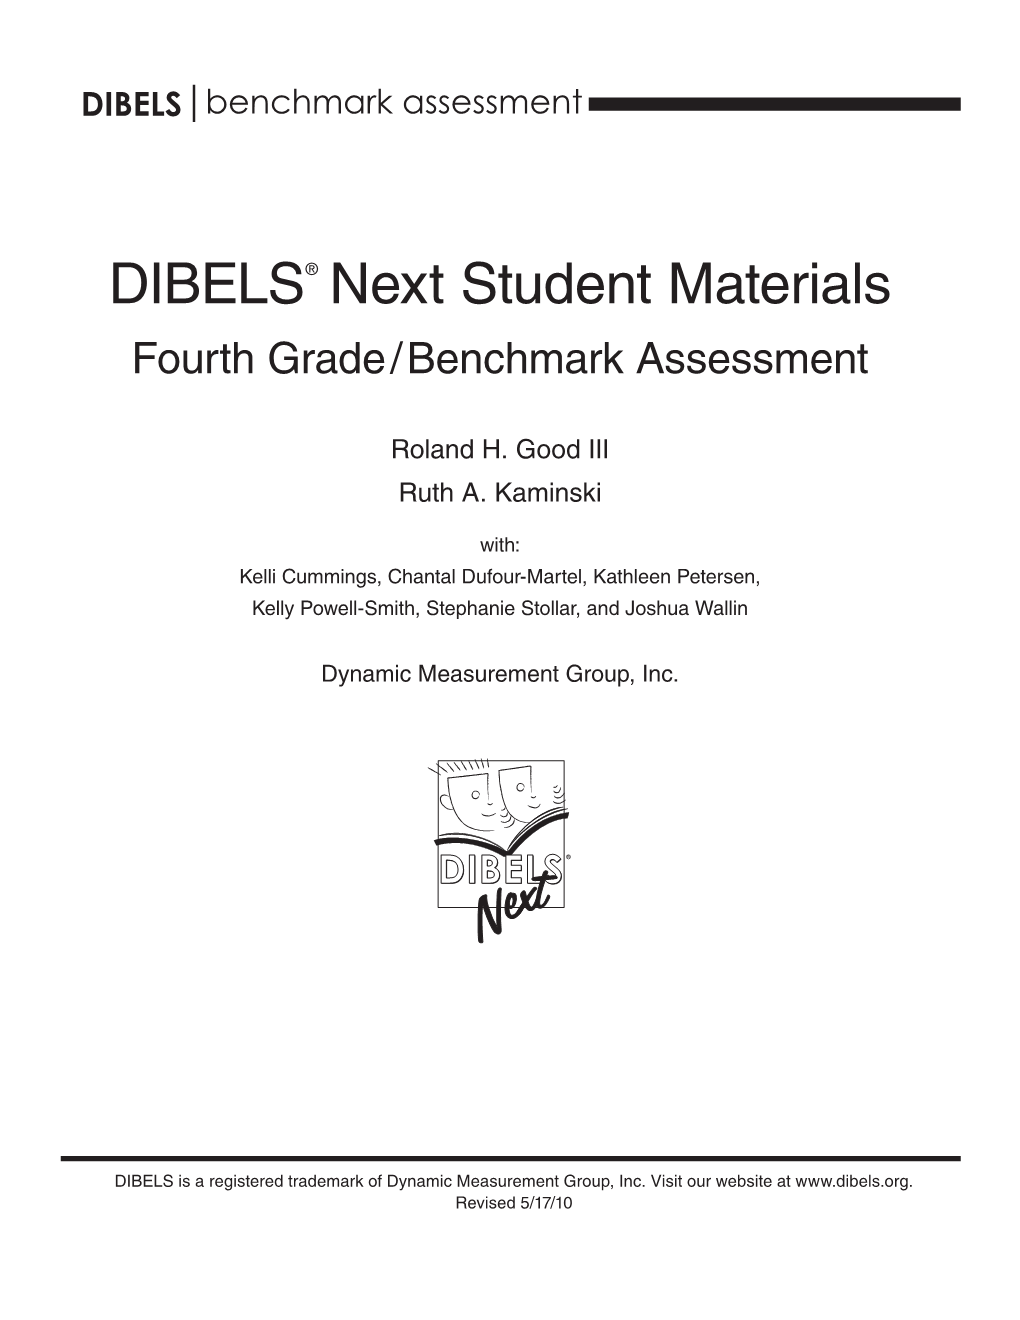 DIBELS® Next Student Materials Fourth Grade/Benchmark Assessment